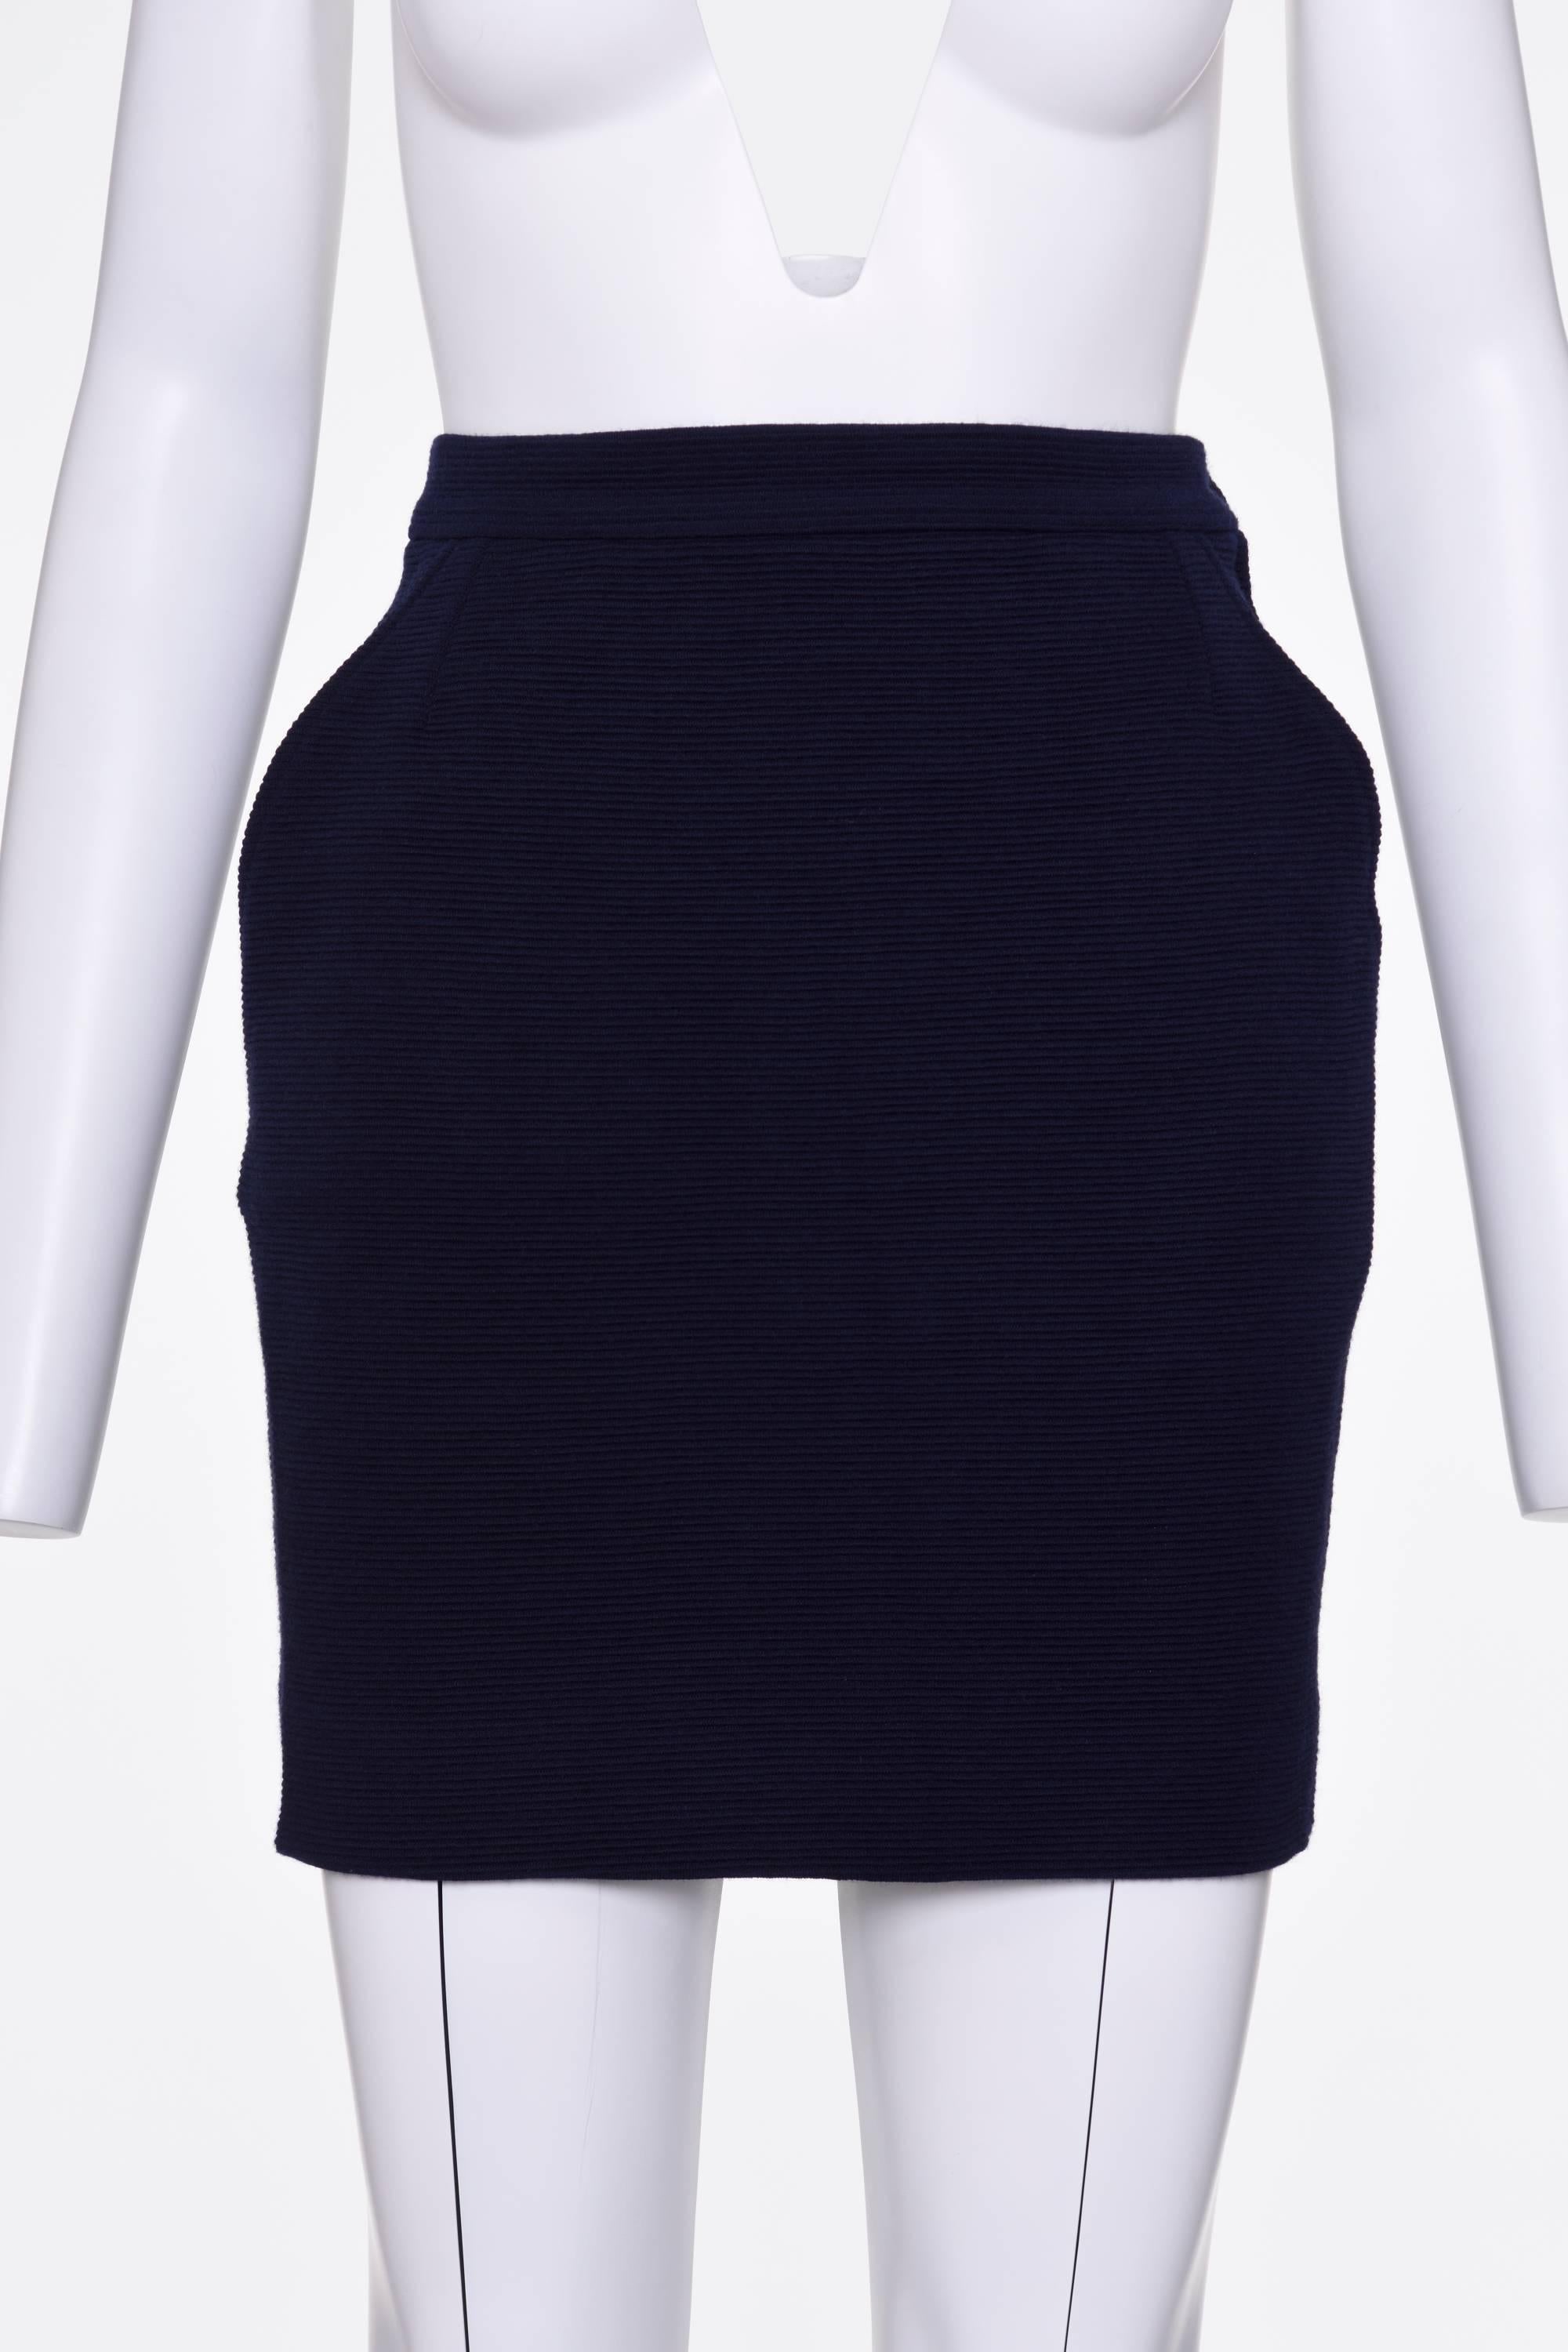 Black 1980s YVES SAINT LAURENT Rive Gauche Gabardine and Wool Suit Skirt For Sale